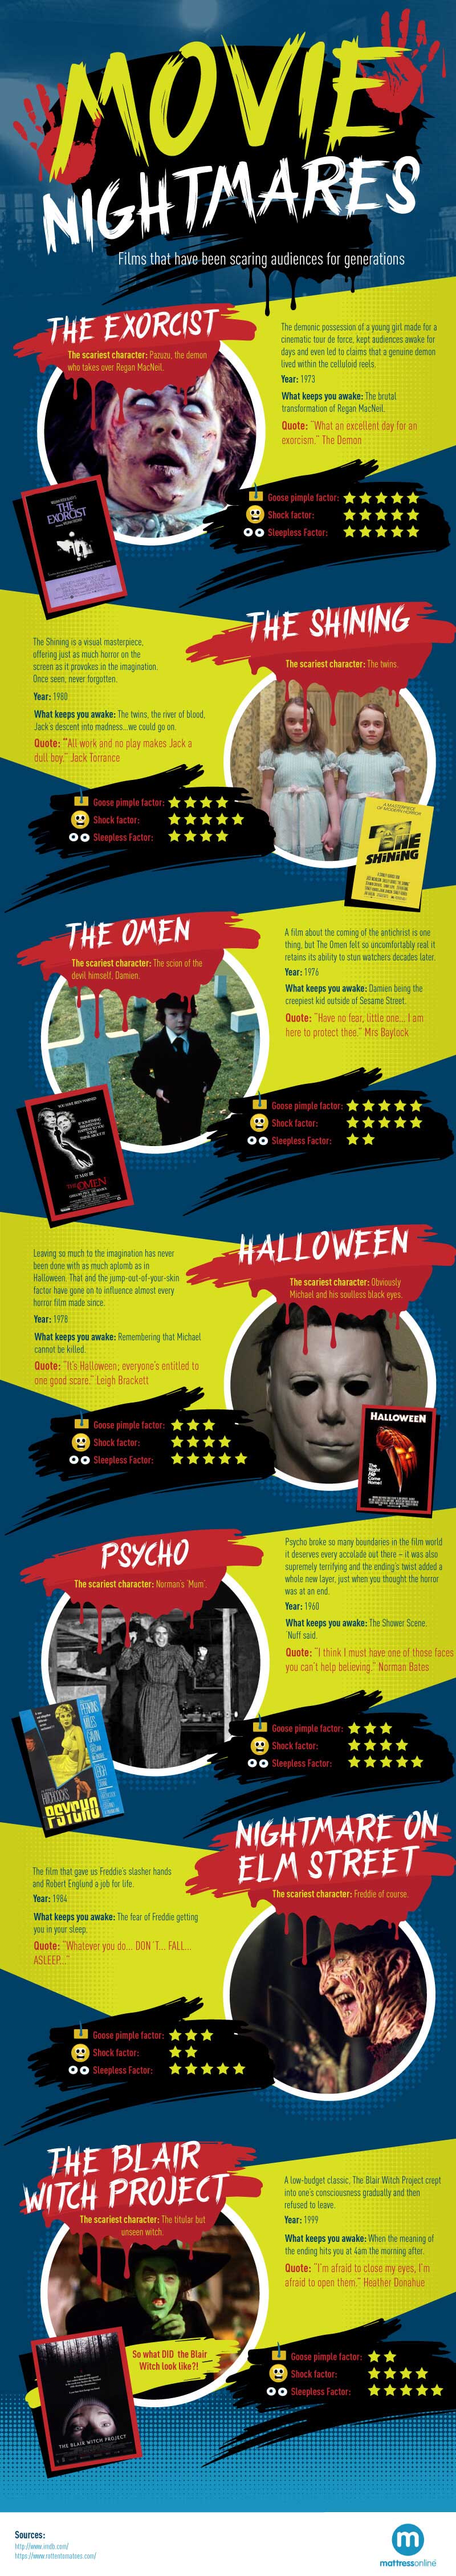 Movie Nightmares Infographic